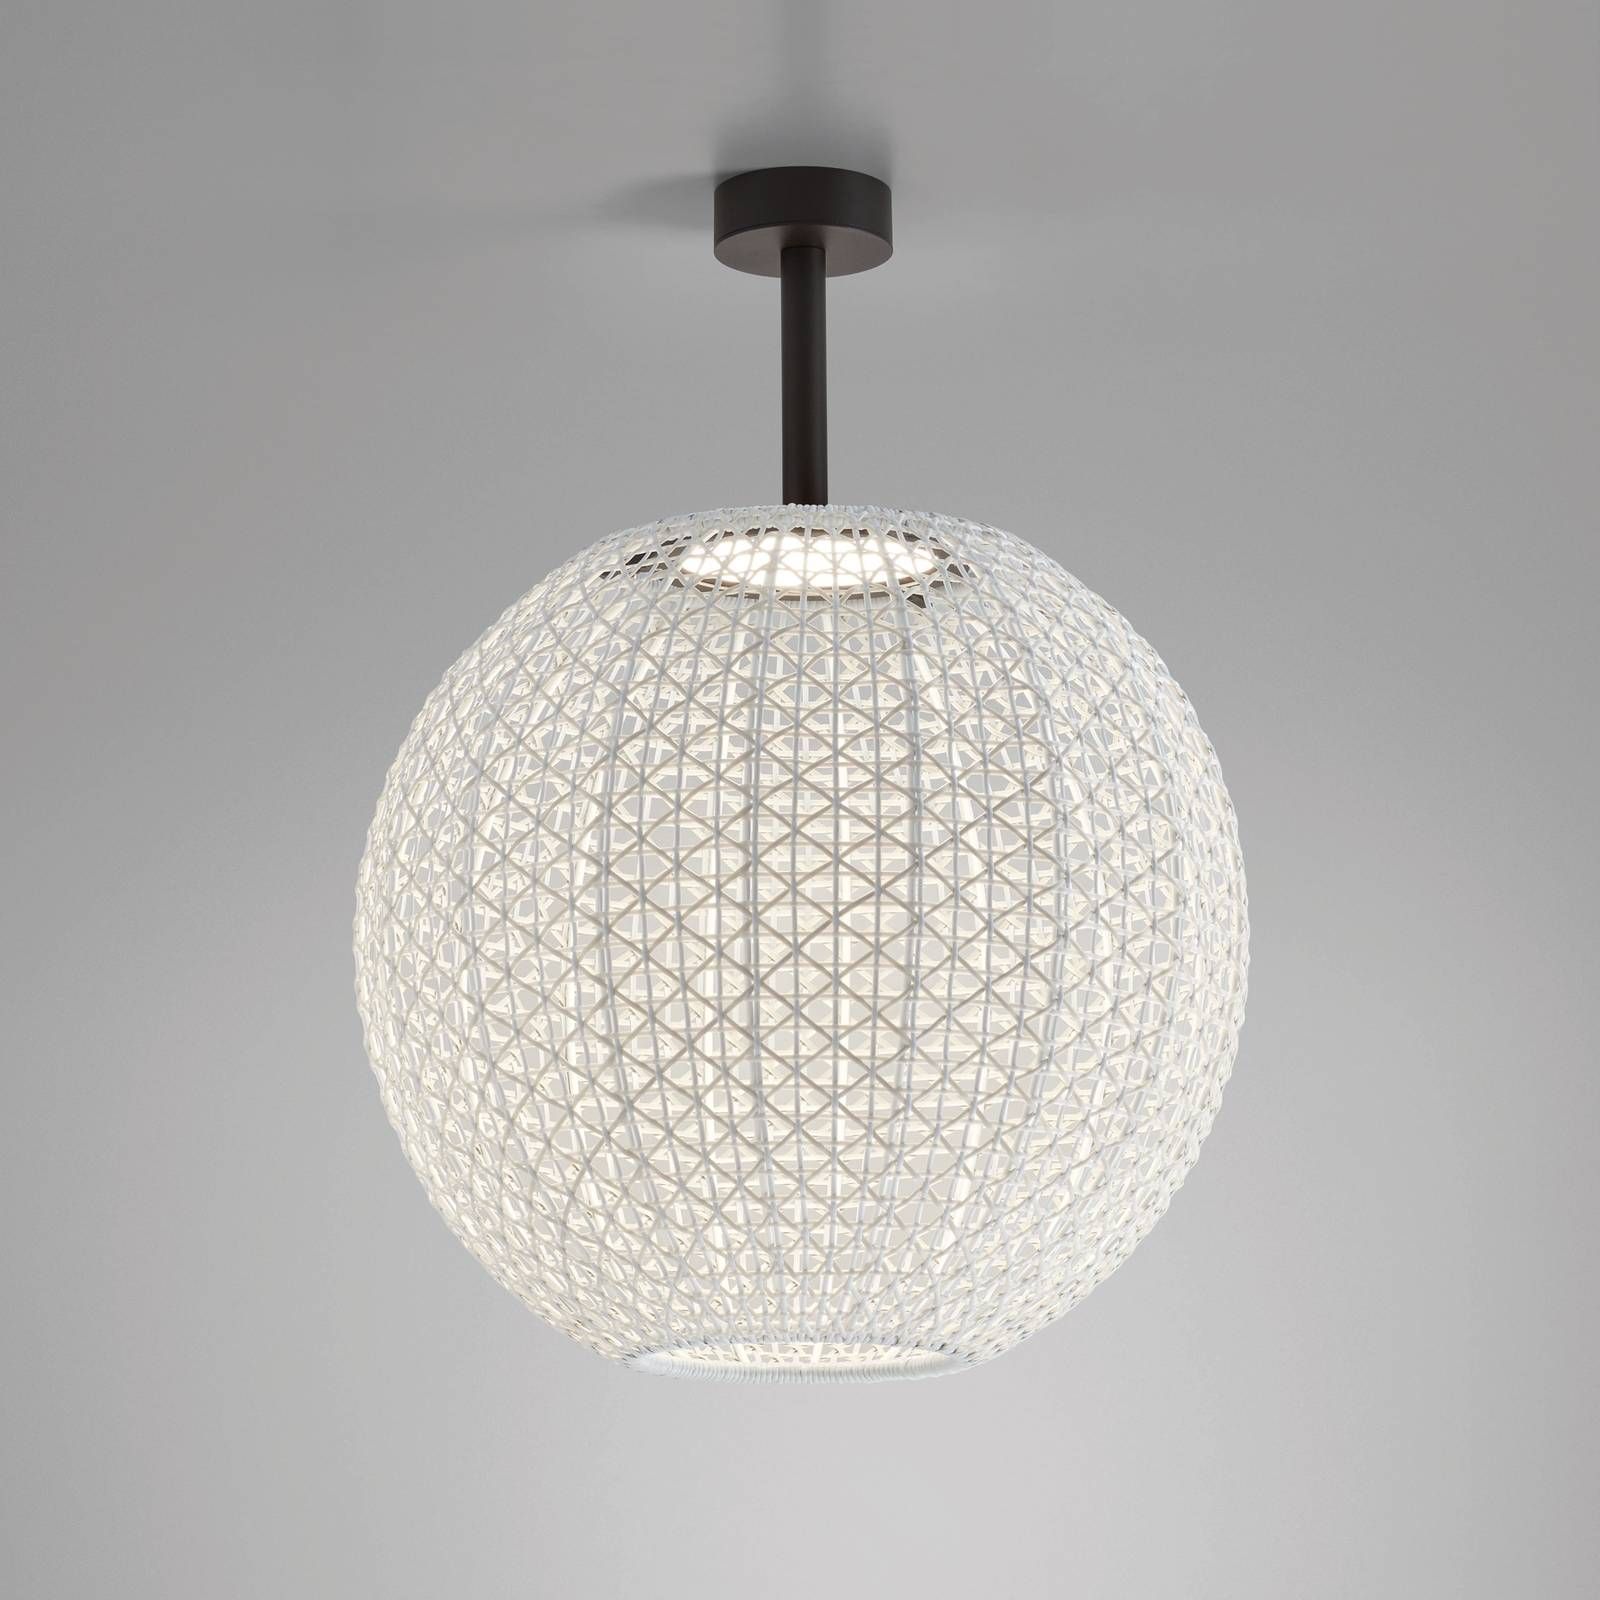 Bover Nans Sphere PF/60 LED svietidlo béžová, ušľachtilá oceľ, hliník, syntetické vlákno, polykarbonát, 14W, K: 82cm